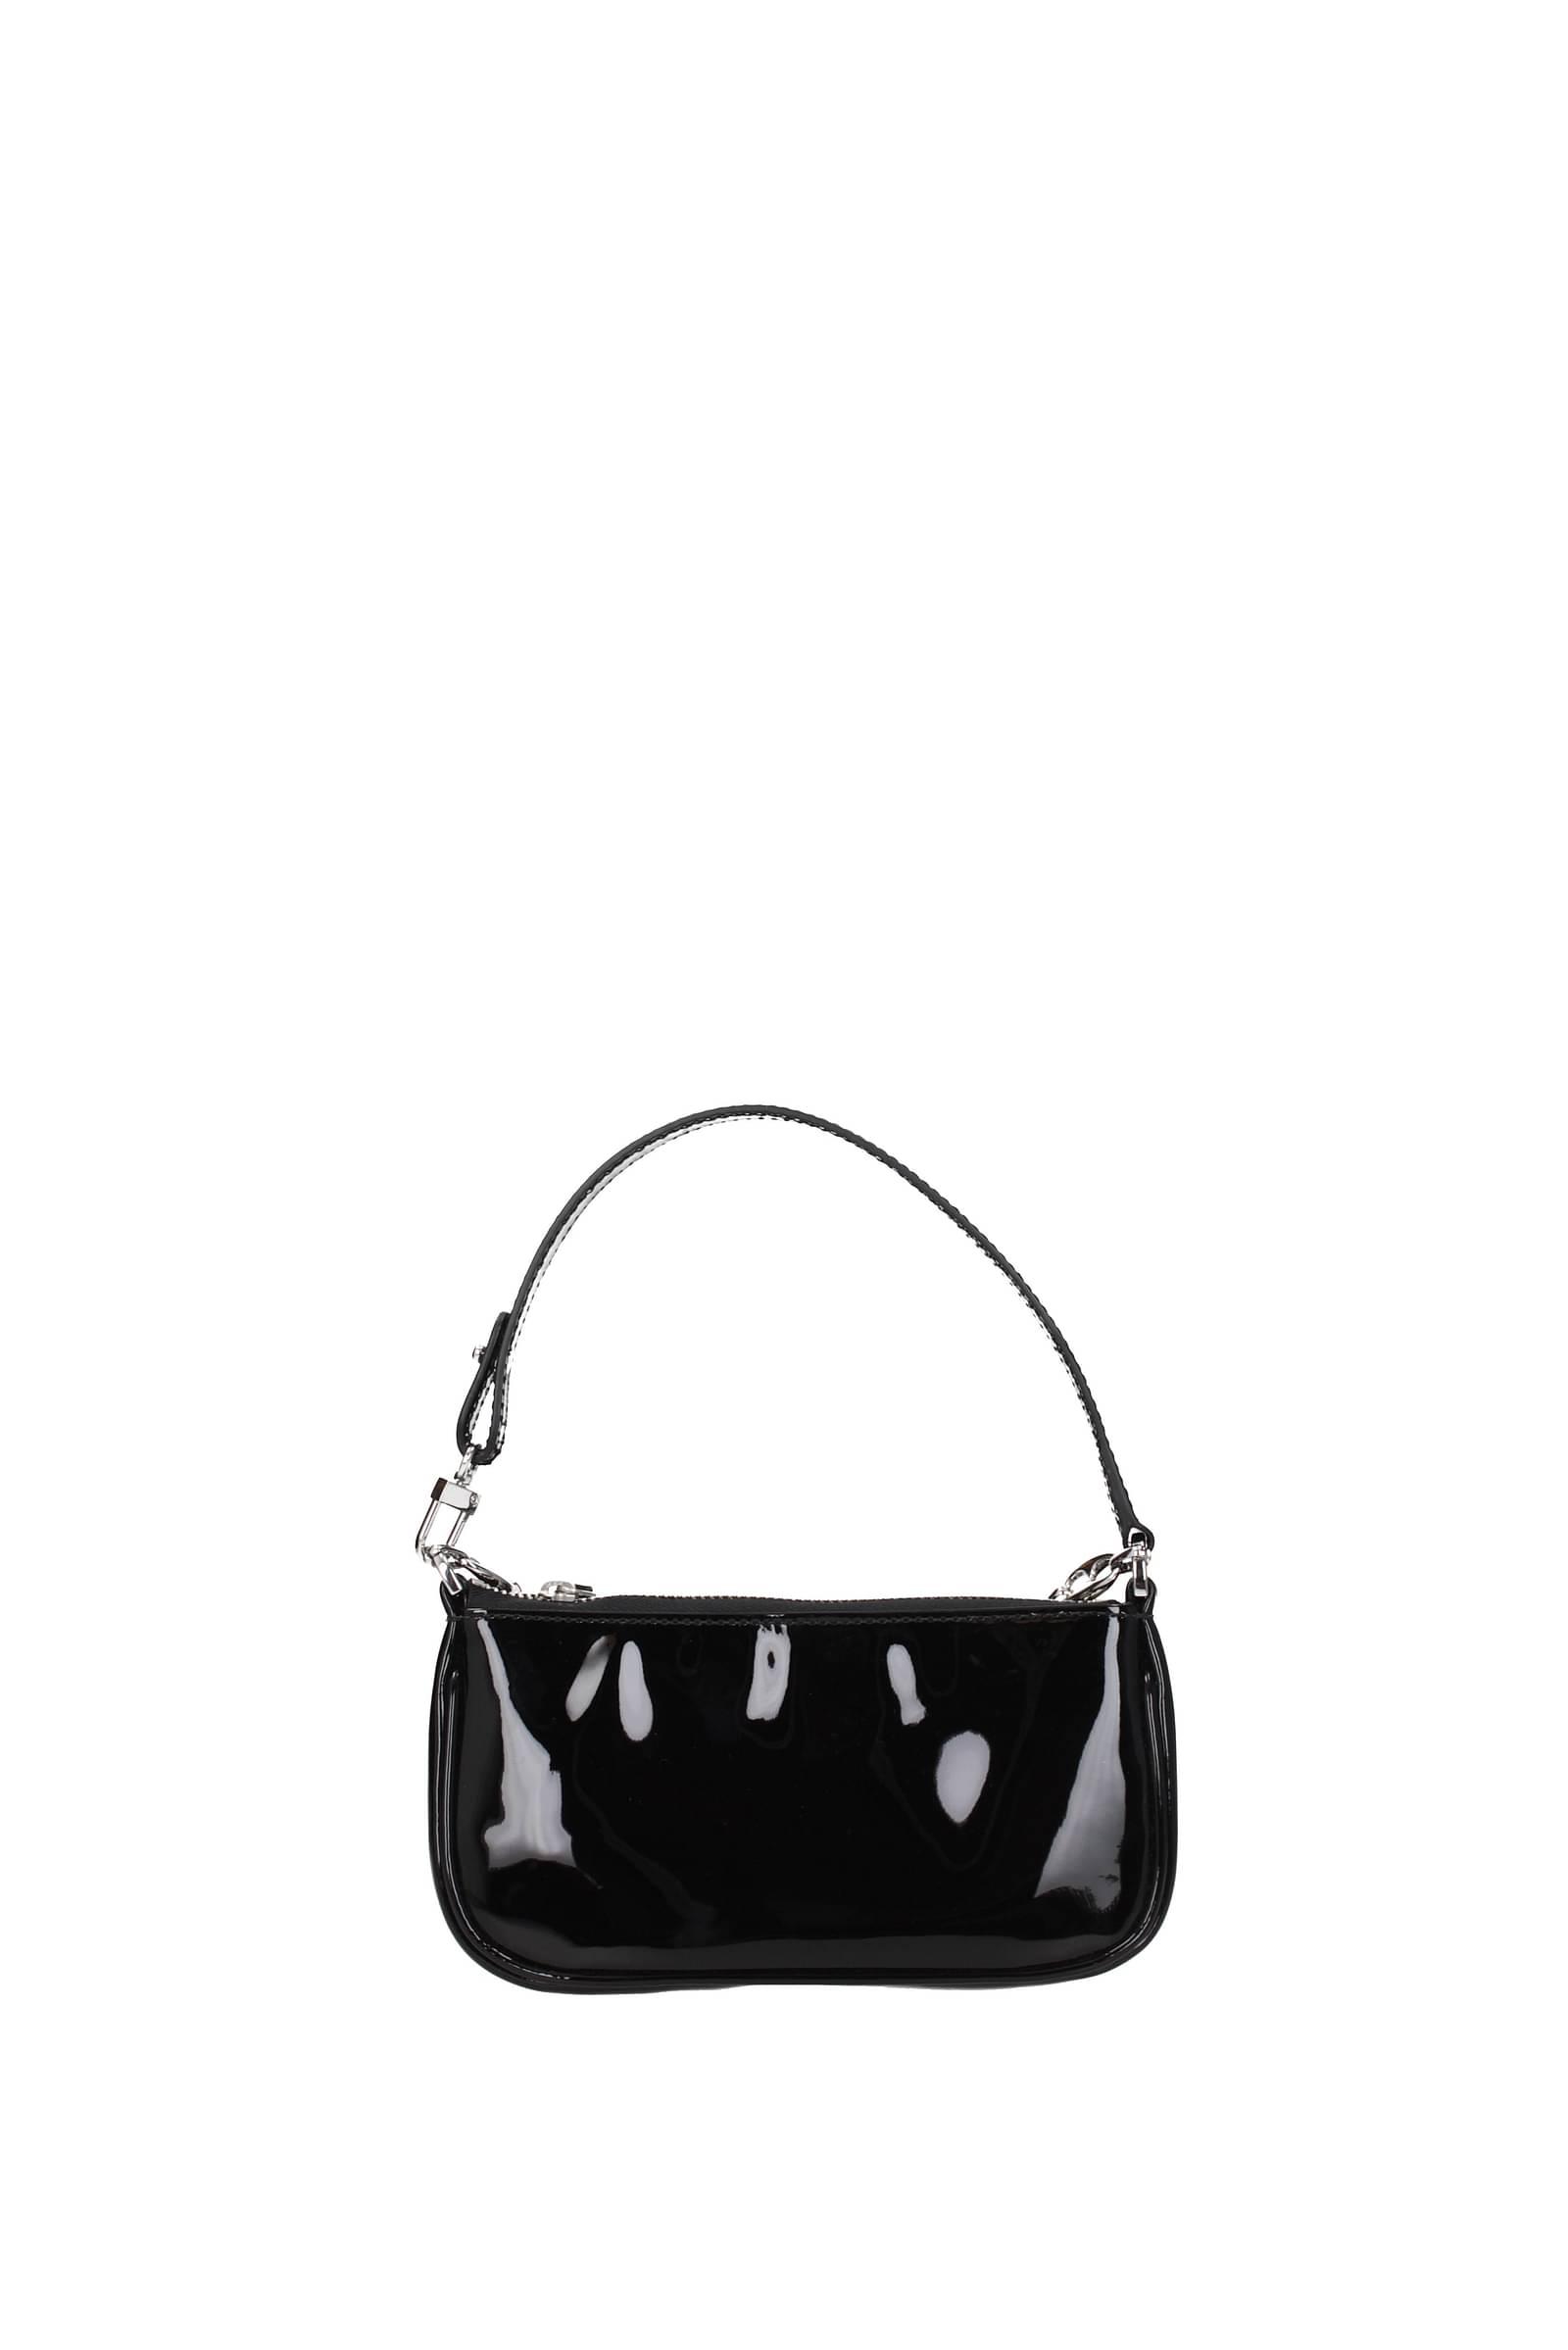 BY FAR Handbags Rachel Patent Leather in Black